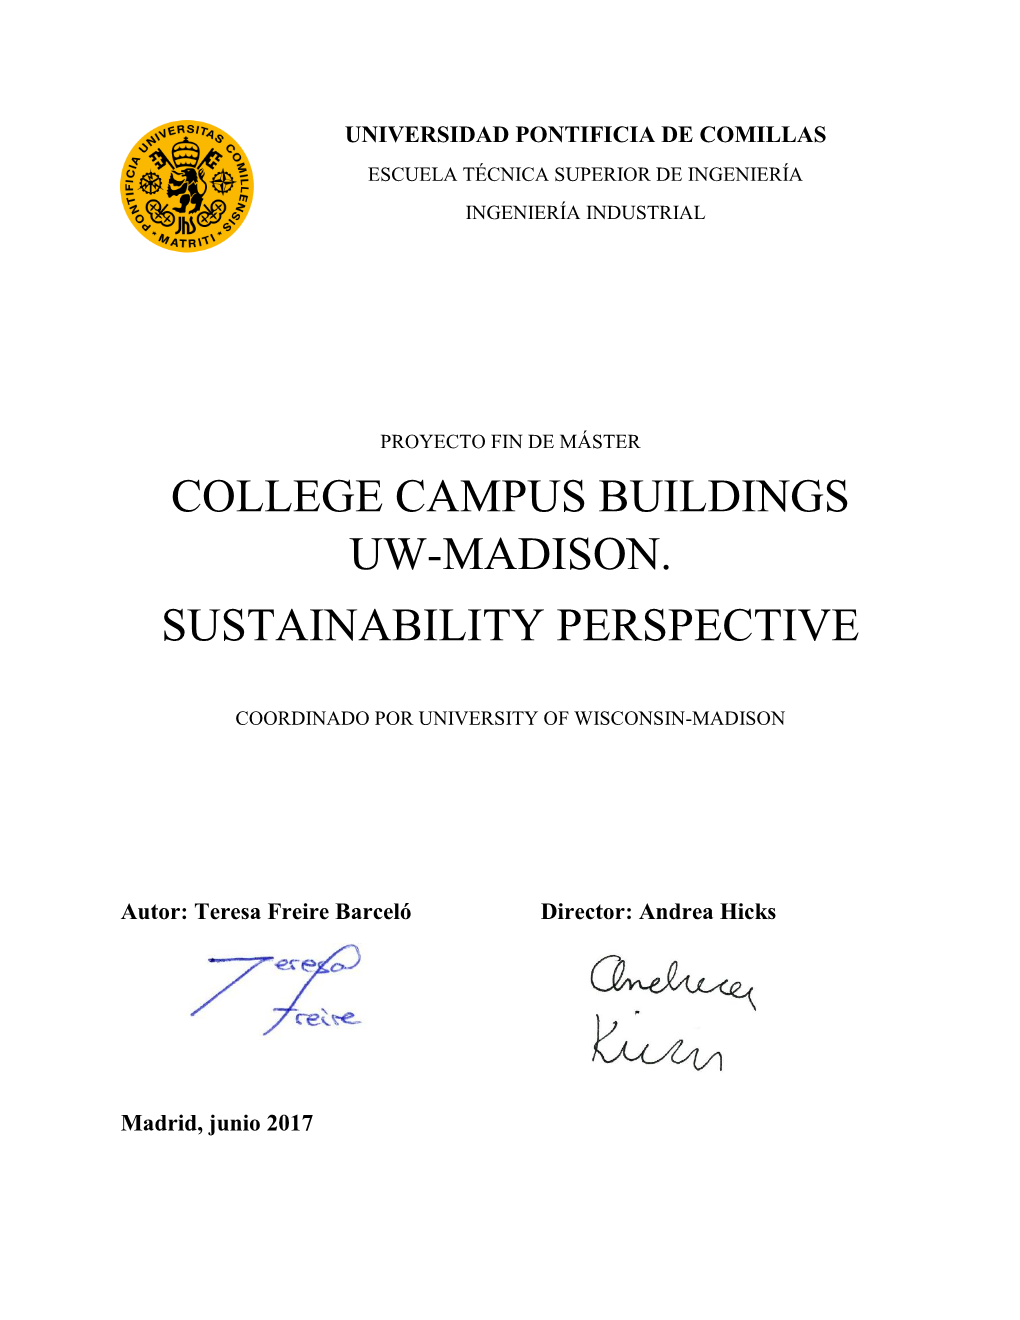 College Campus Buildings Uw-Madison. Sustainability Perspective